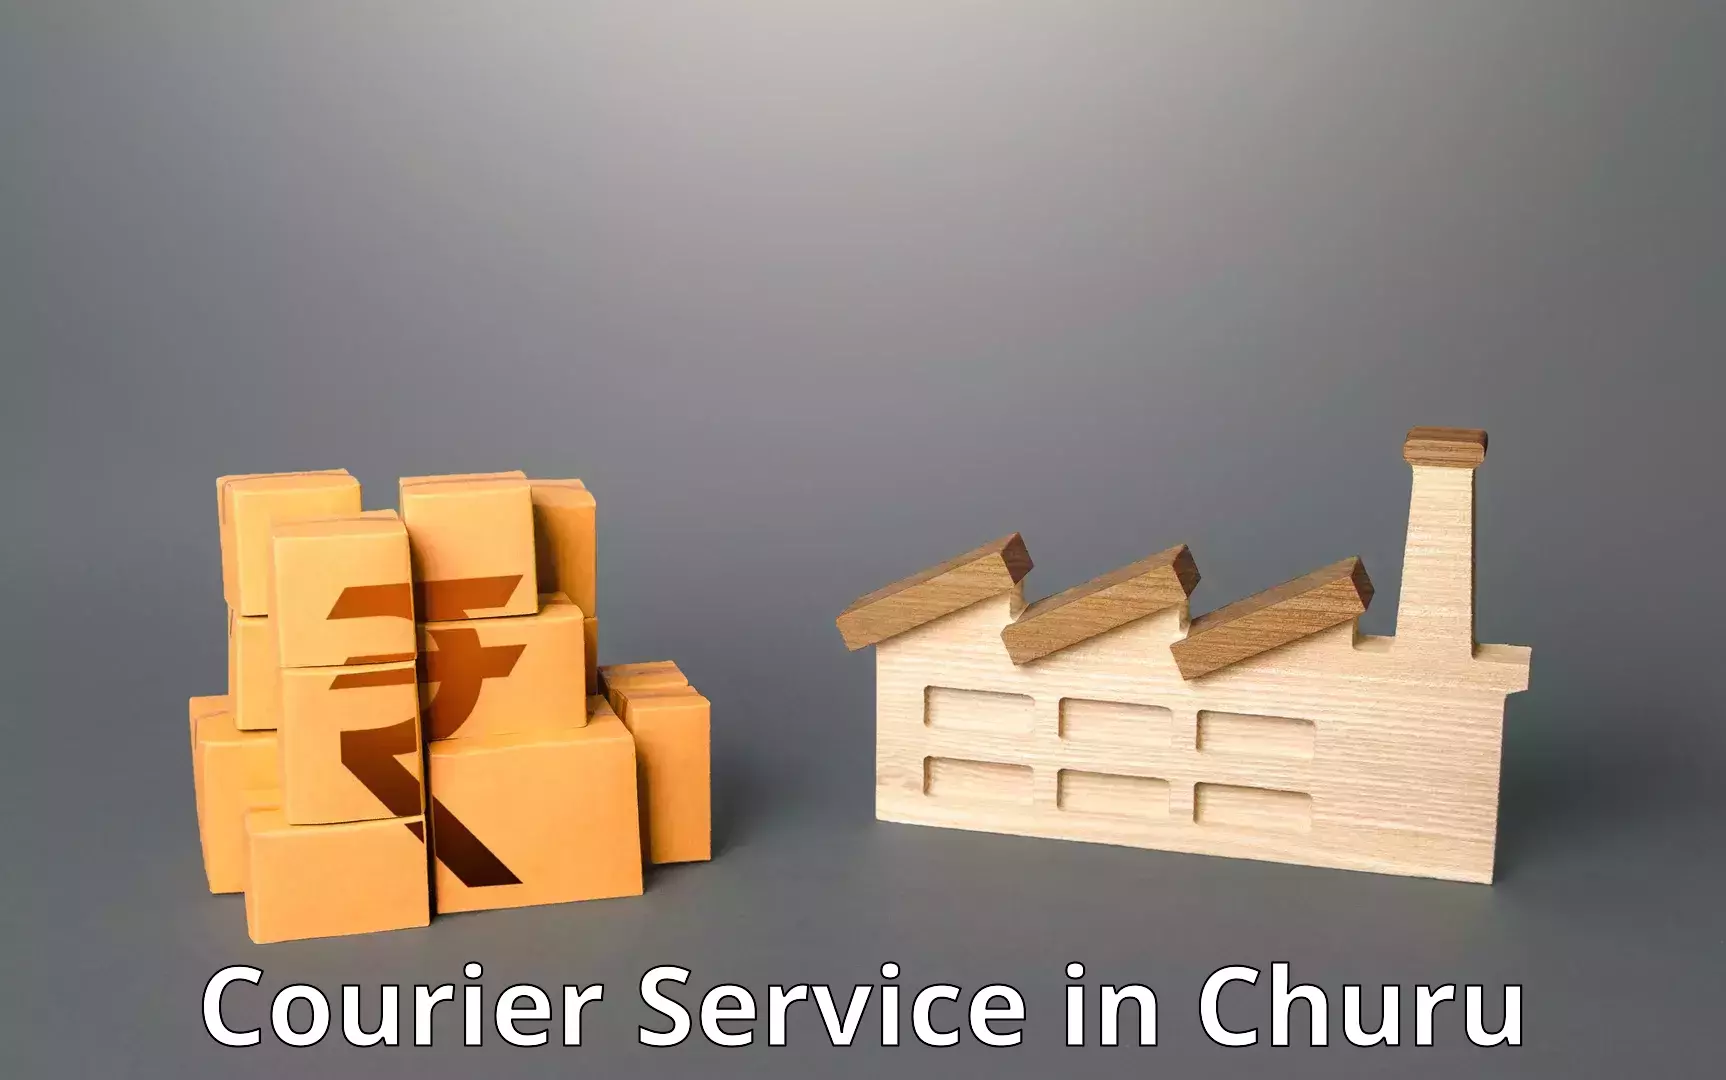 Efficient parcel tracking in Churu